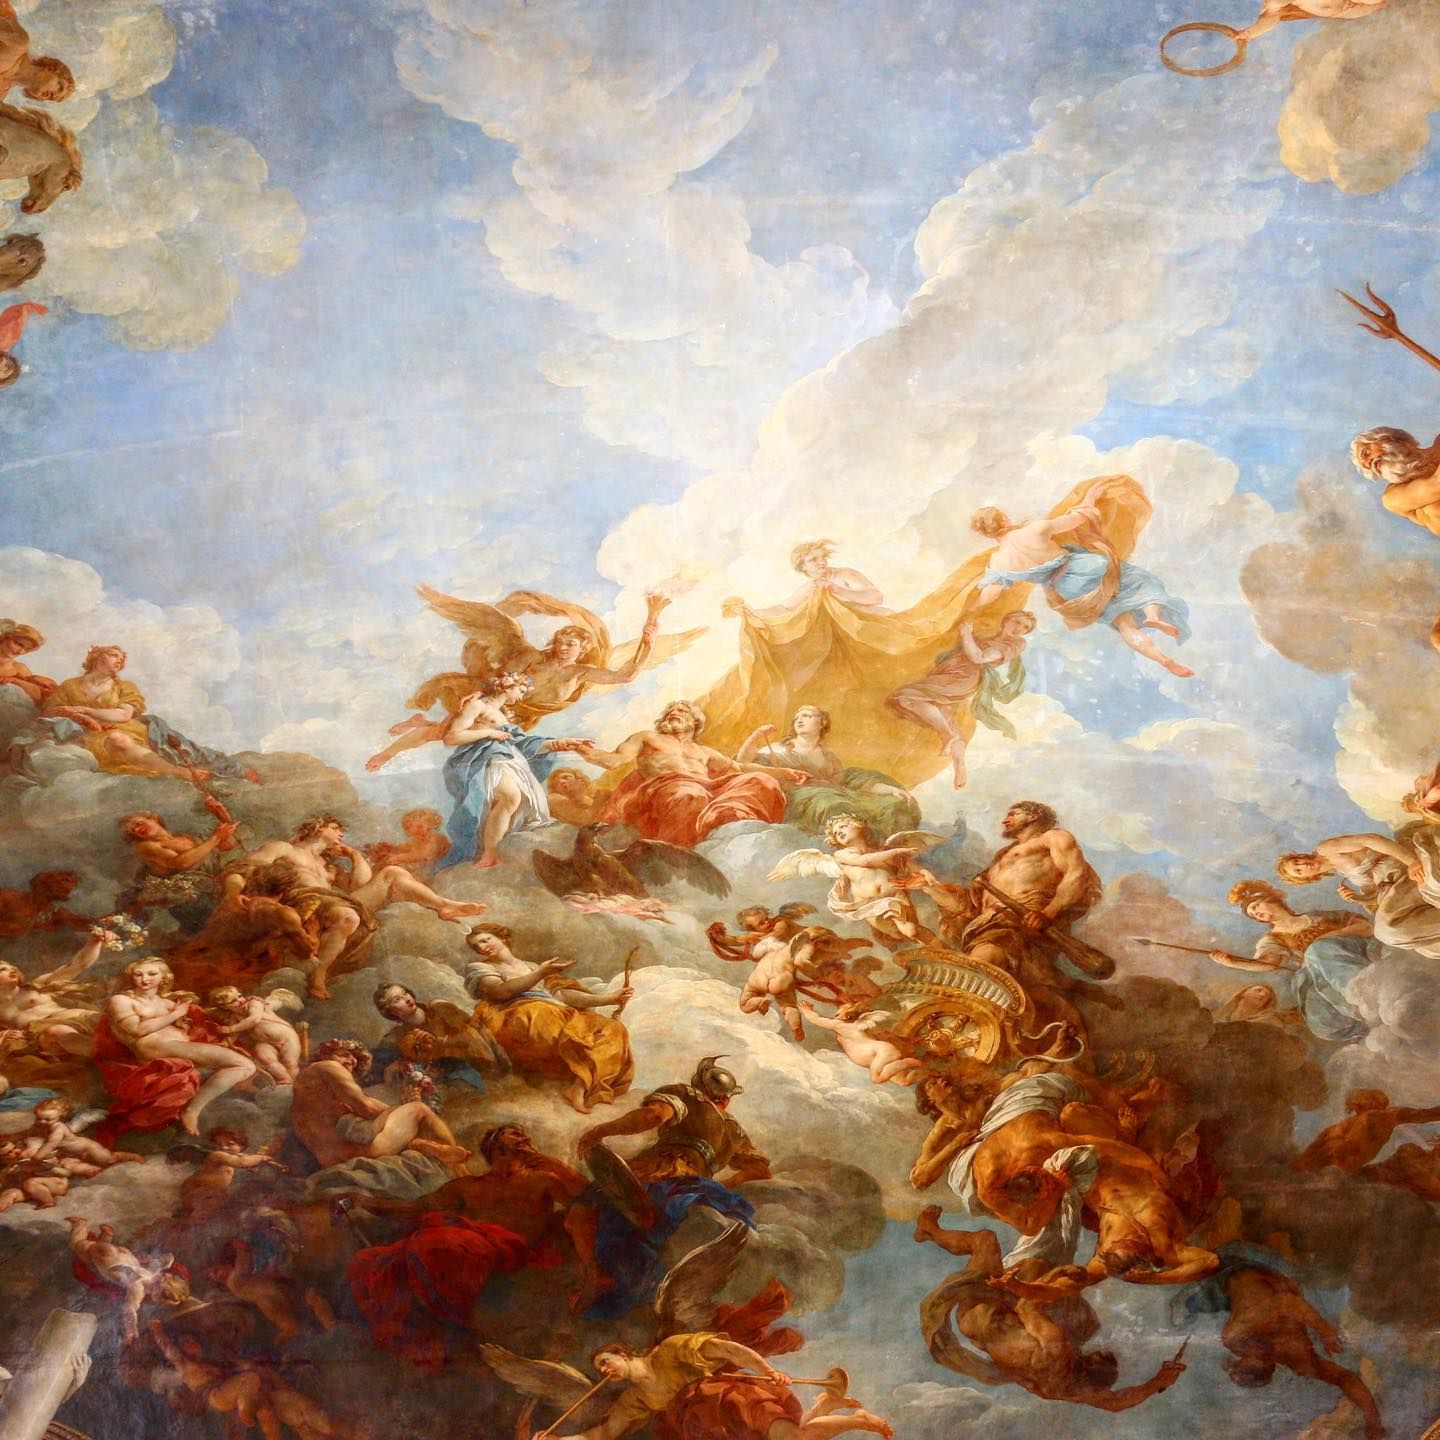 When visiting the Palace of Versailles, don't forget to look up ⚜️ #apotheosis #parisphoto #versailles #ch. Roman painting, Renaissance art, Renaissance paintings